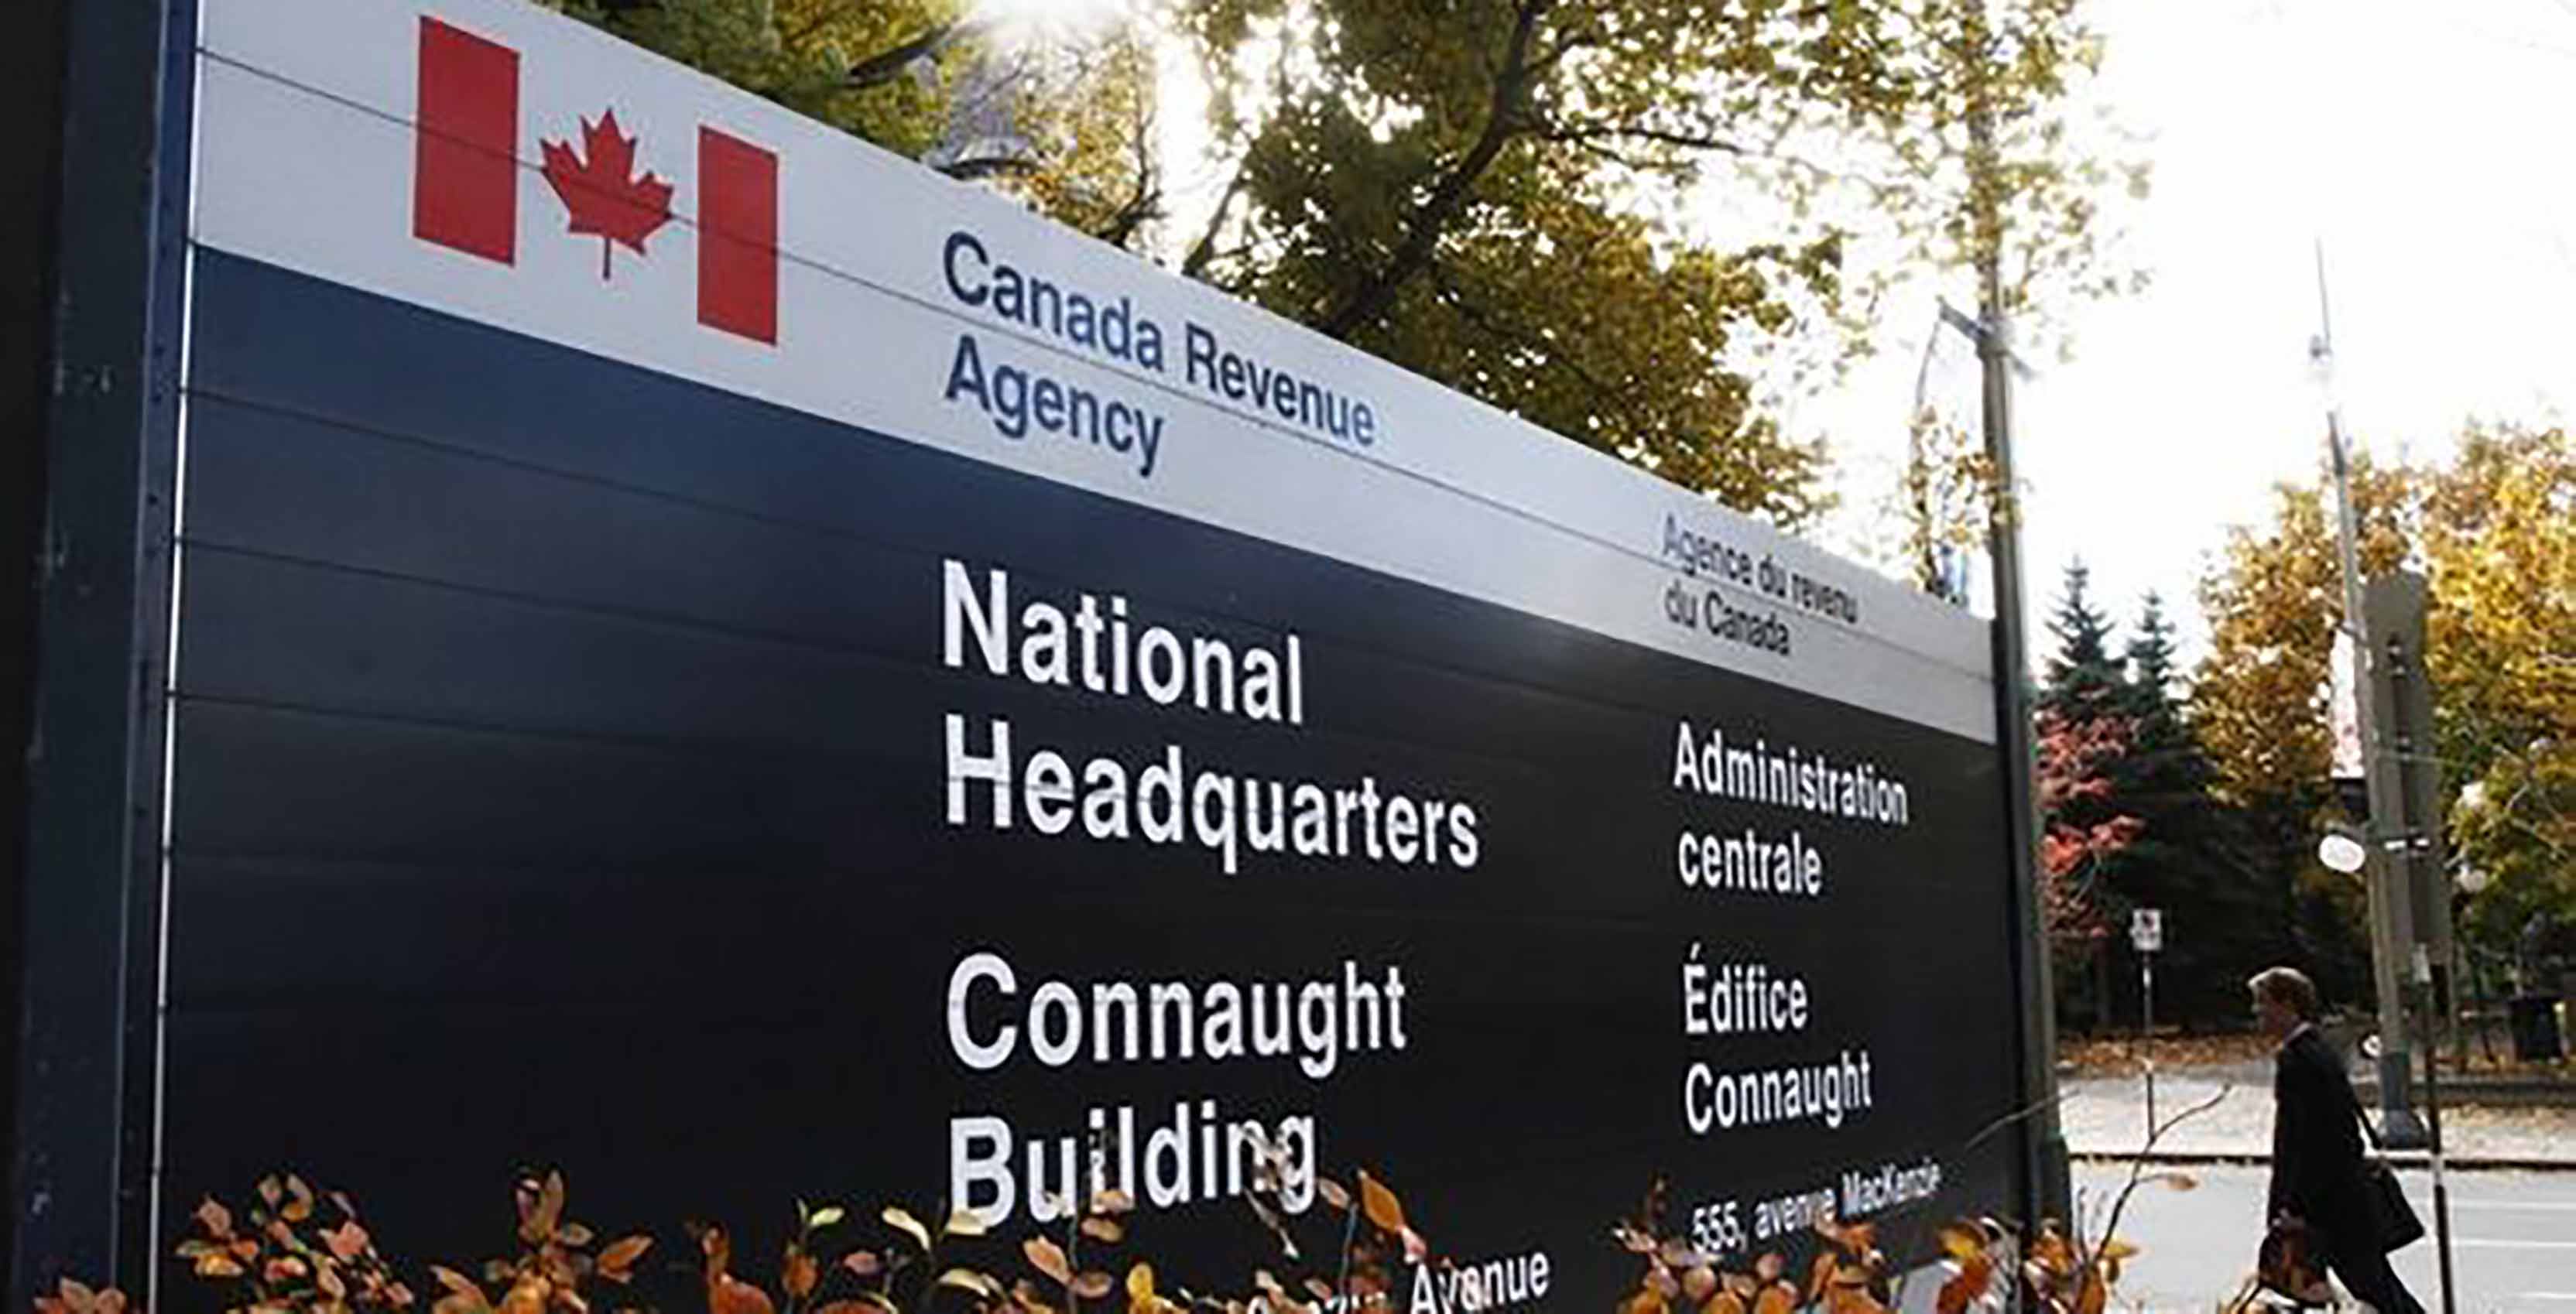 Canada Revenue Agency HQ